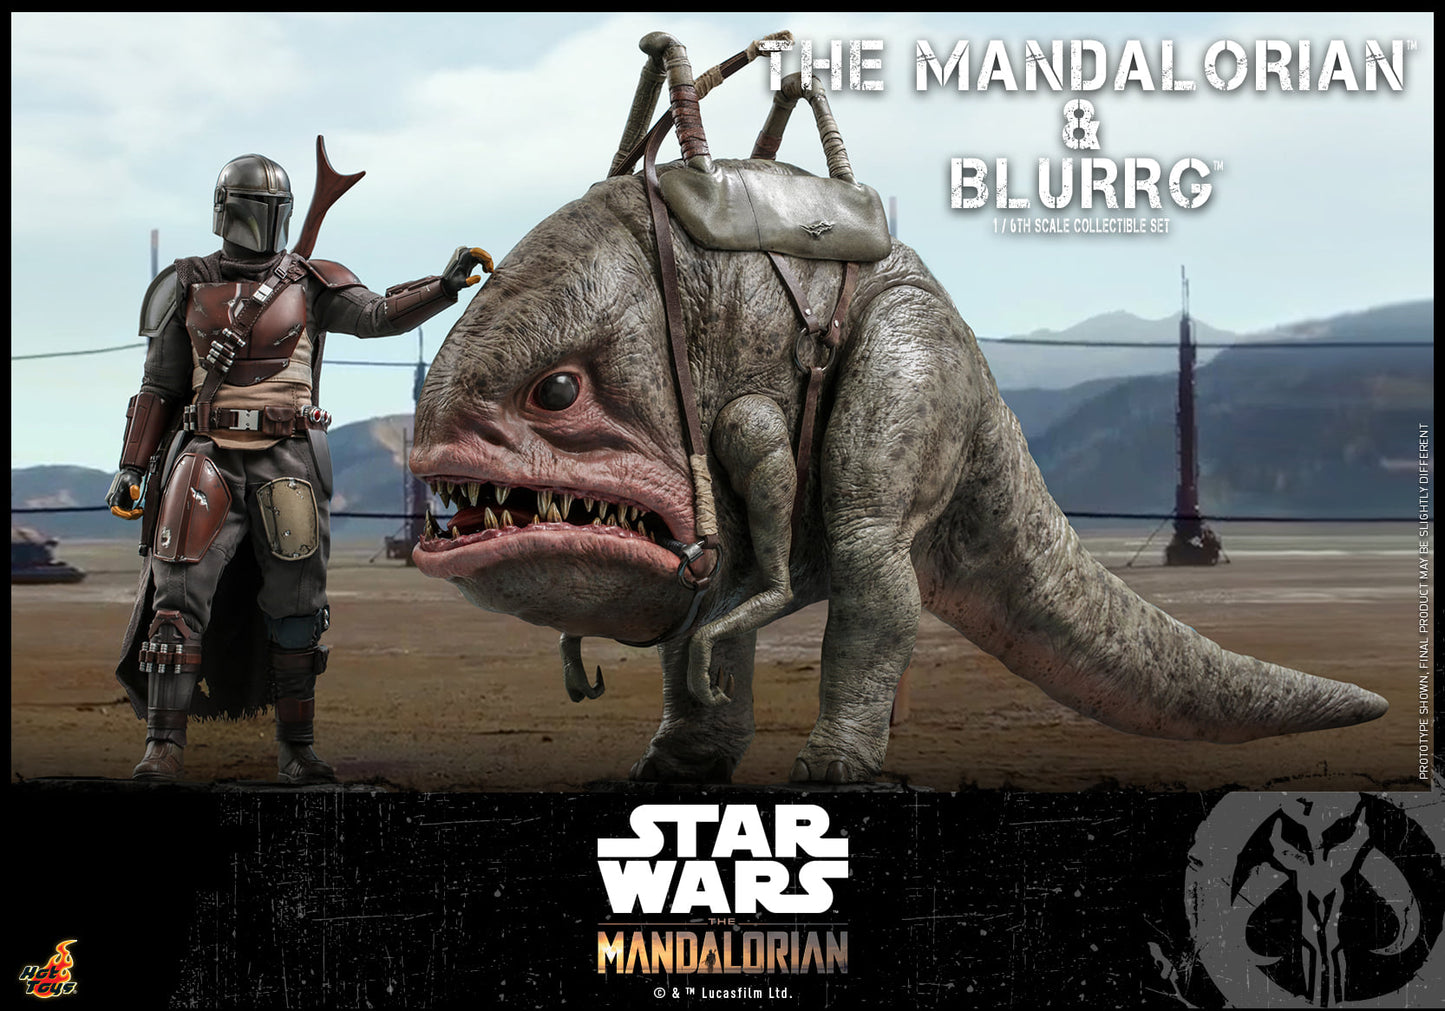 Hot Toys TMS046 1/6 Star Wars: The Mandalorian? - Mandalorian? & Blurrg?